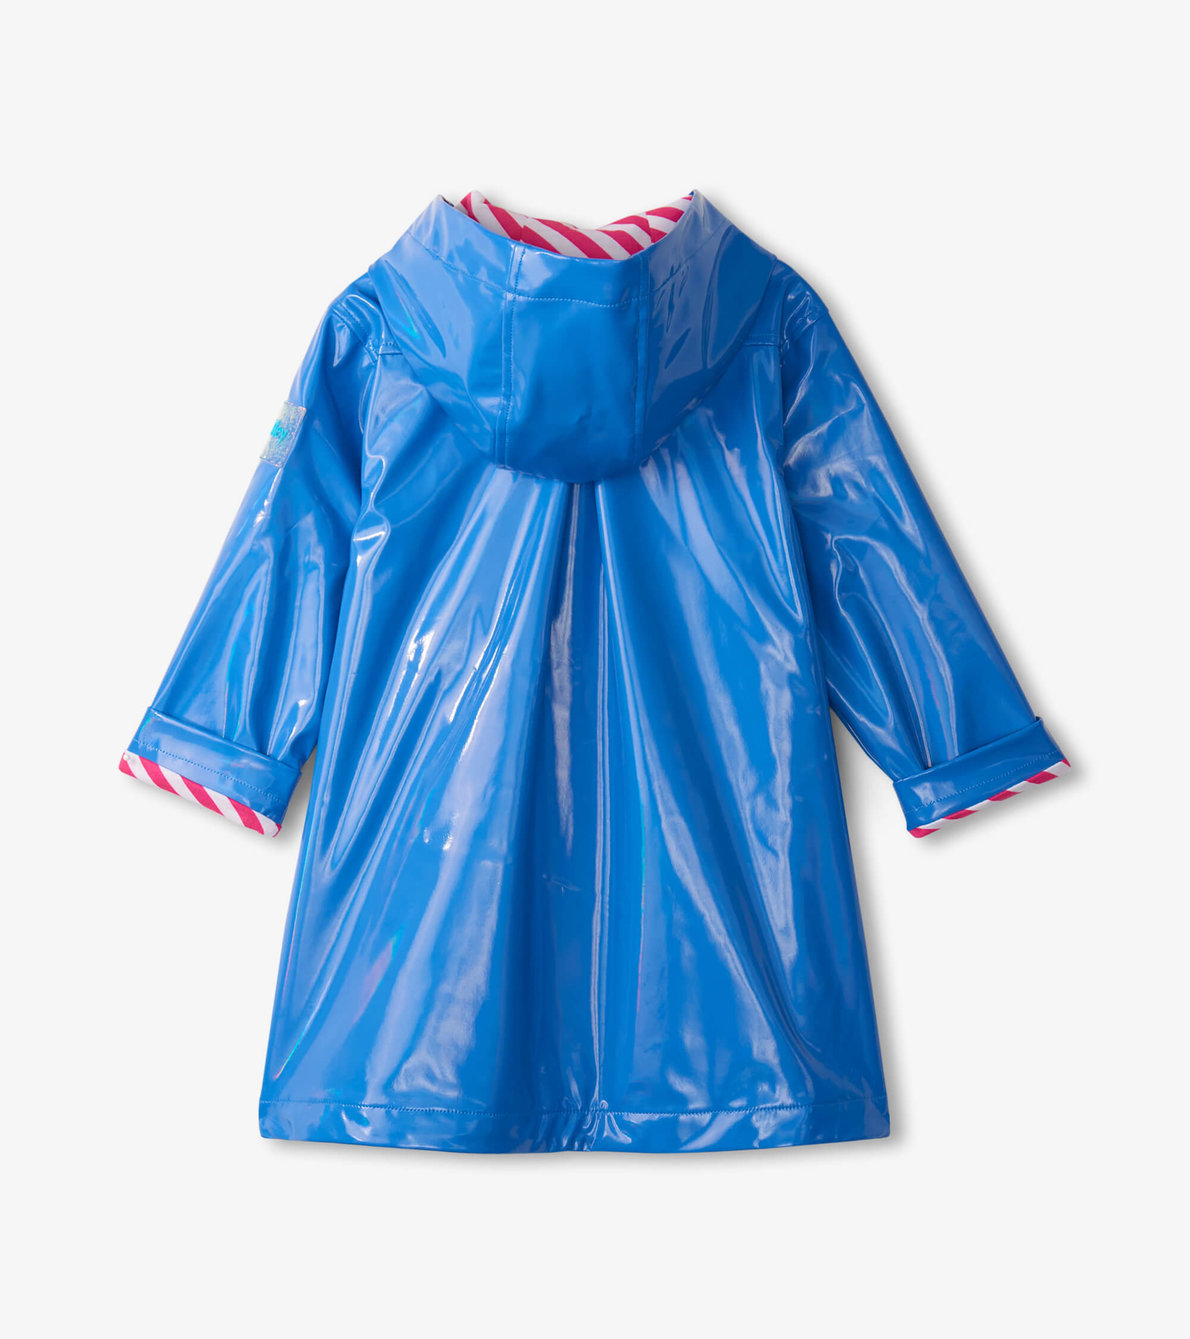 View larger image of Girls Blue Glitter Swing Jacket